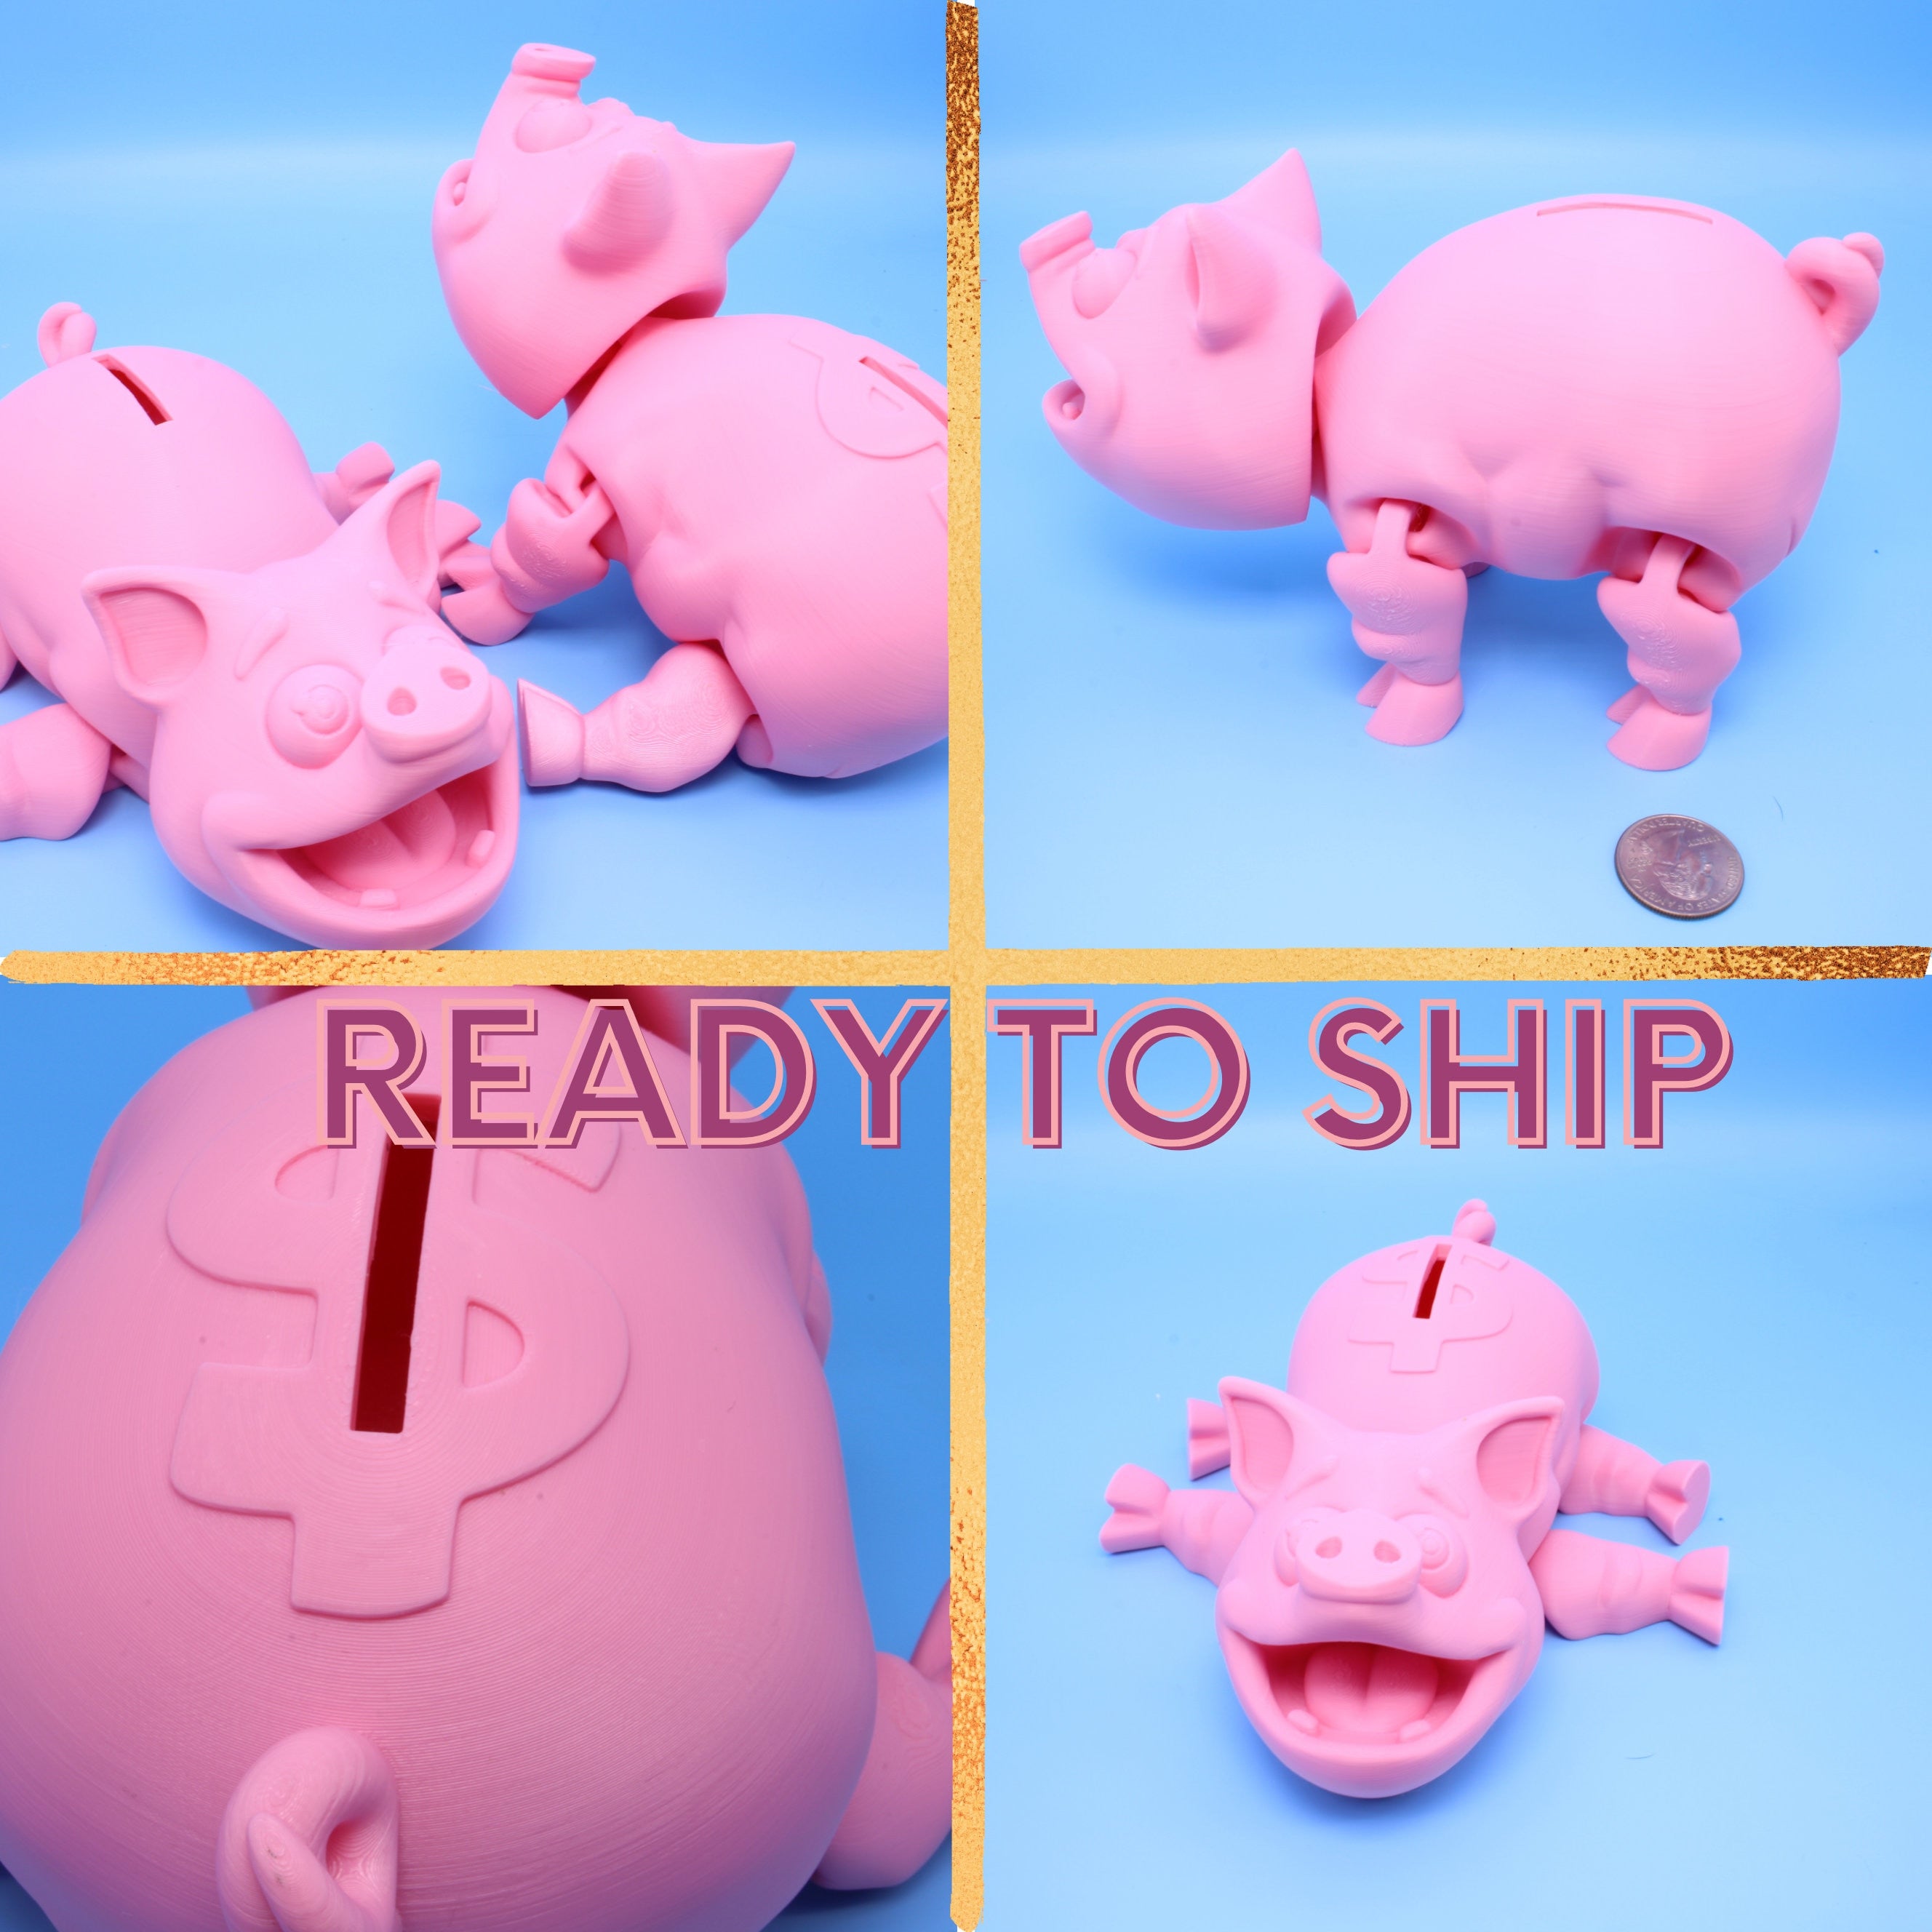 Piggy Bank Pig - 3D Printed